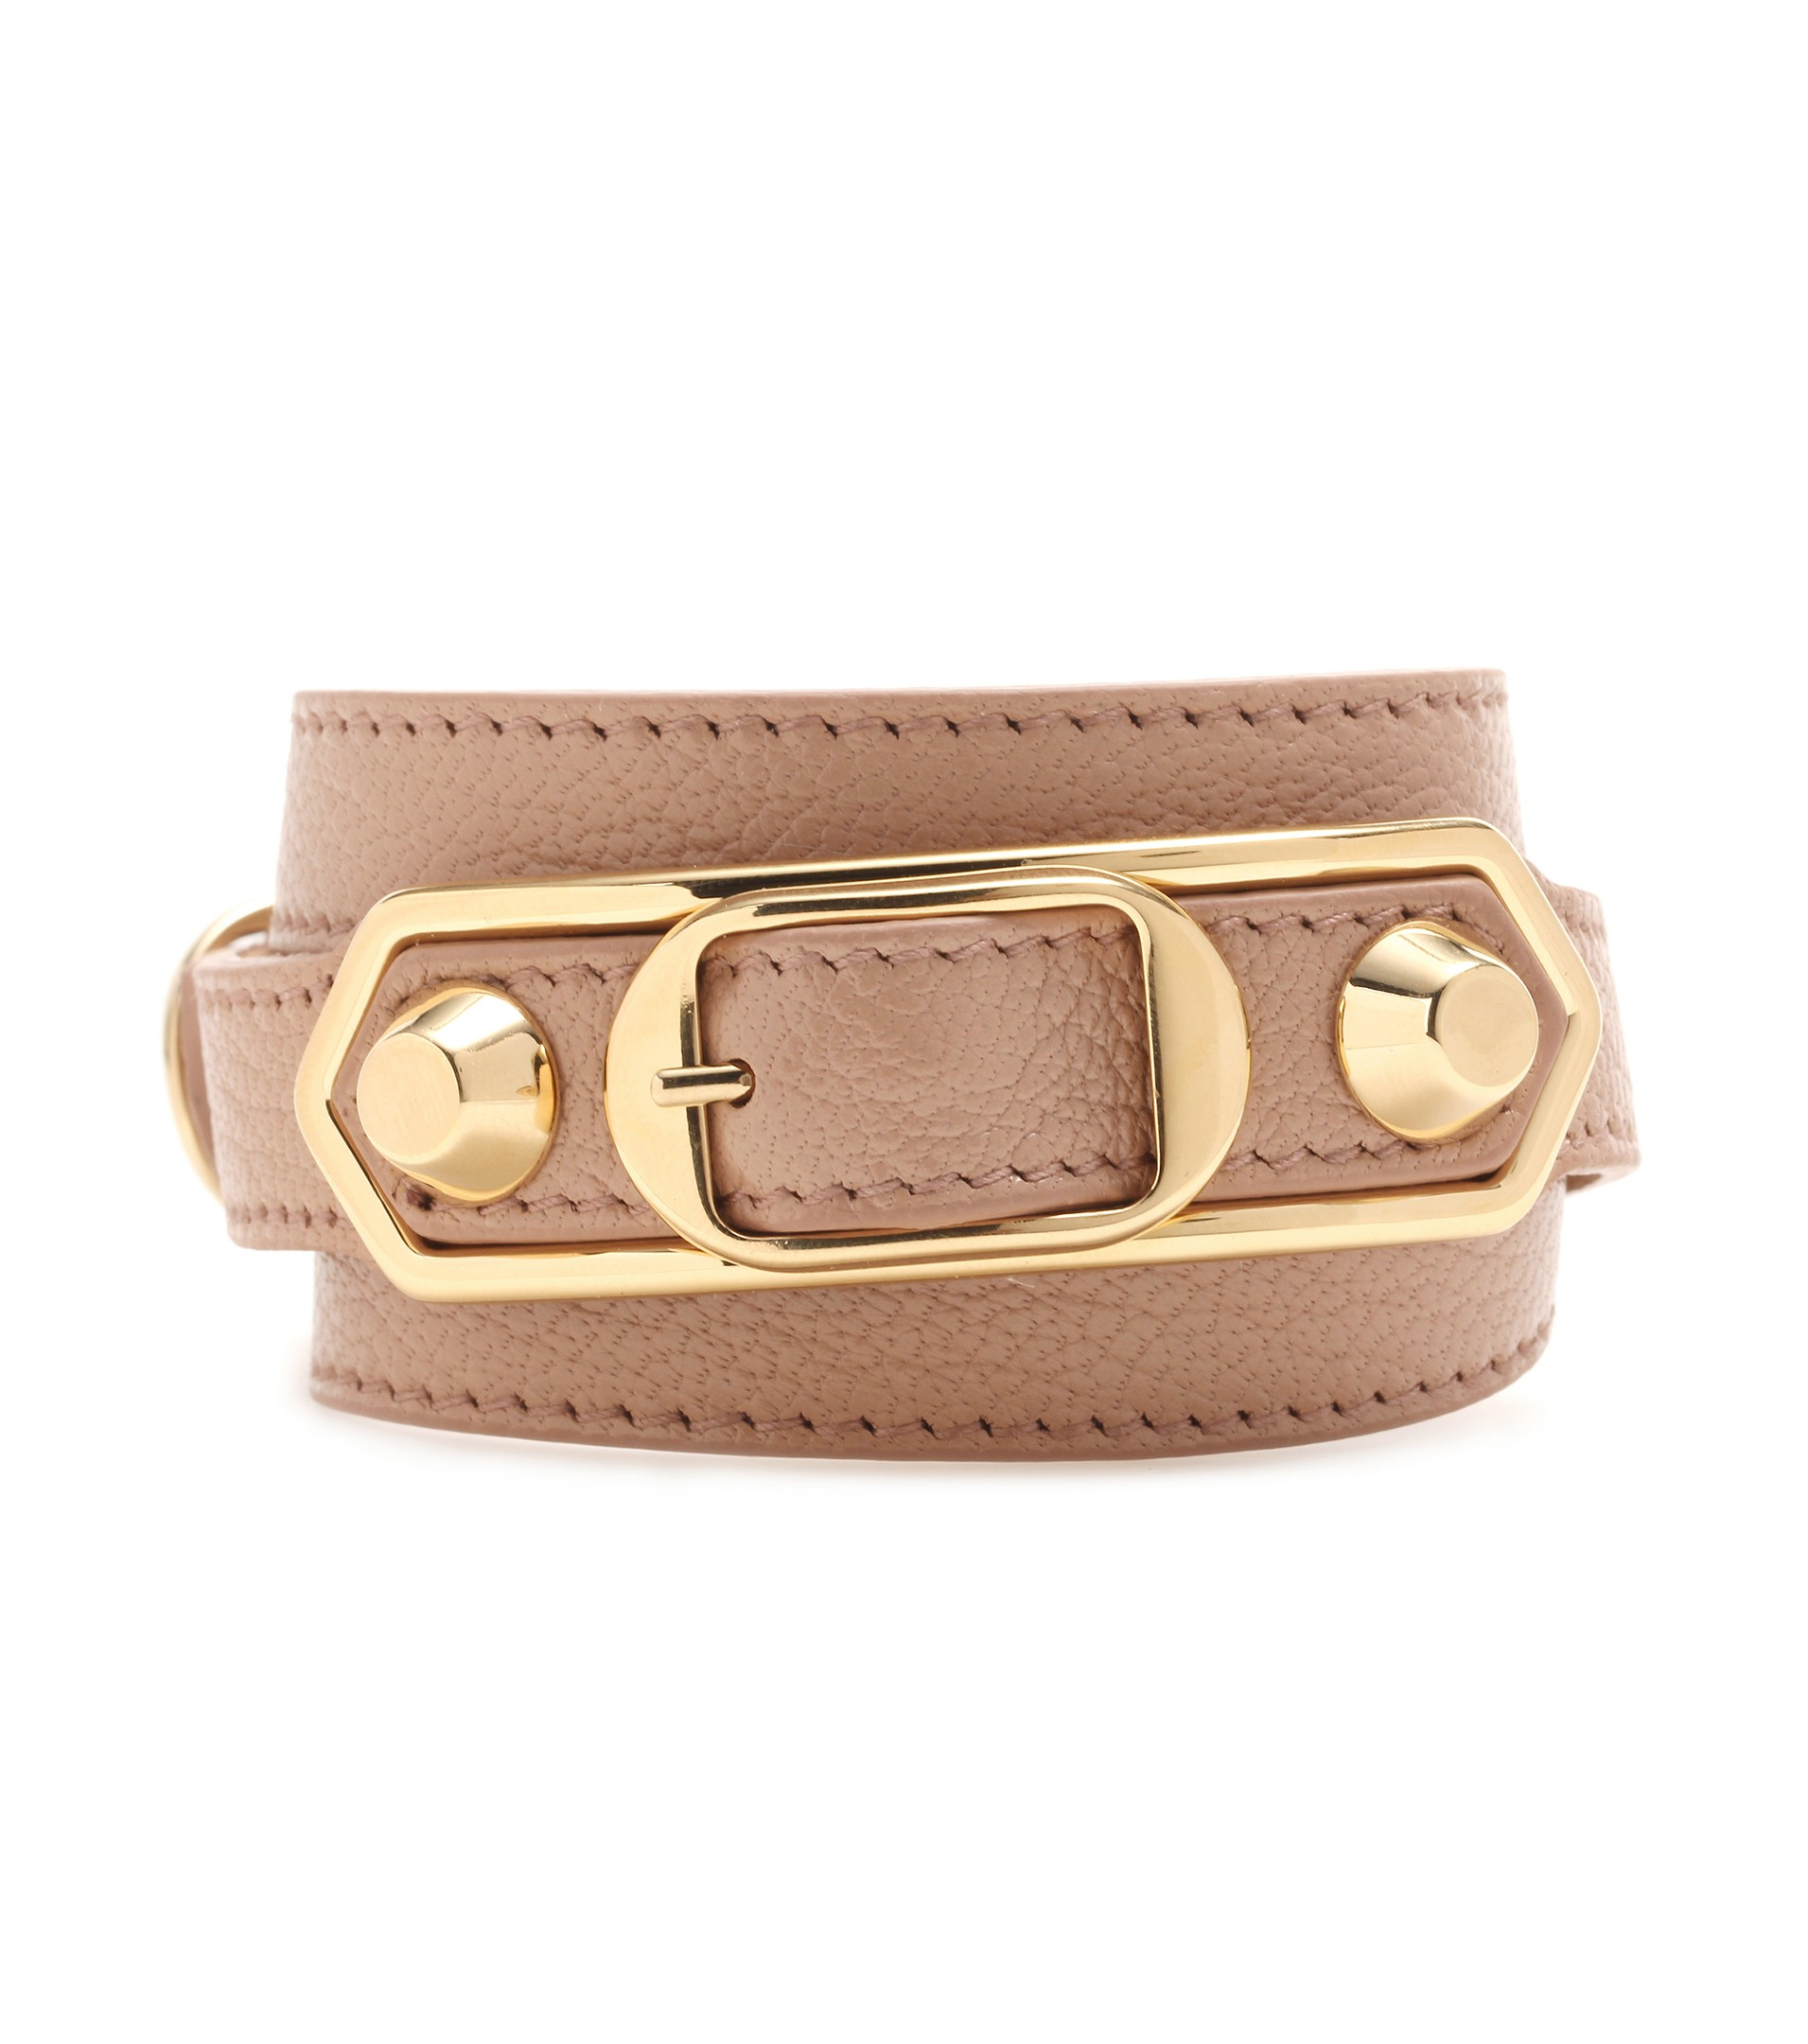 Balenciaga Giant Leather Bracelet in Metallic - Lyst